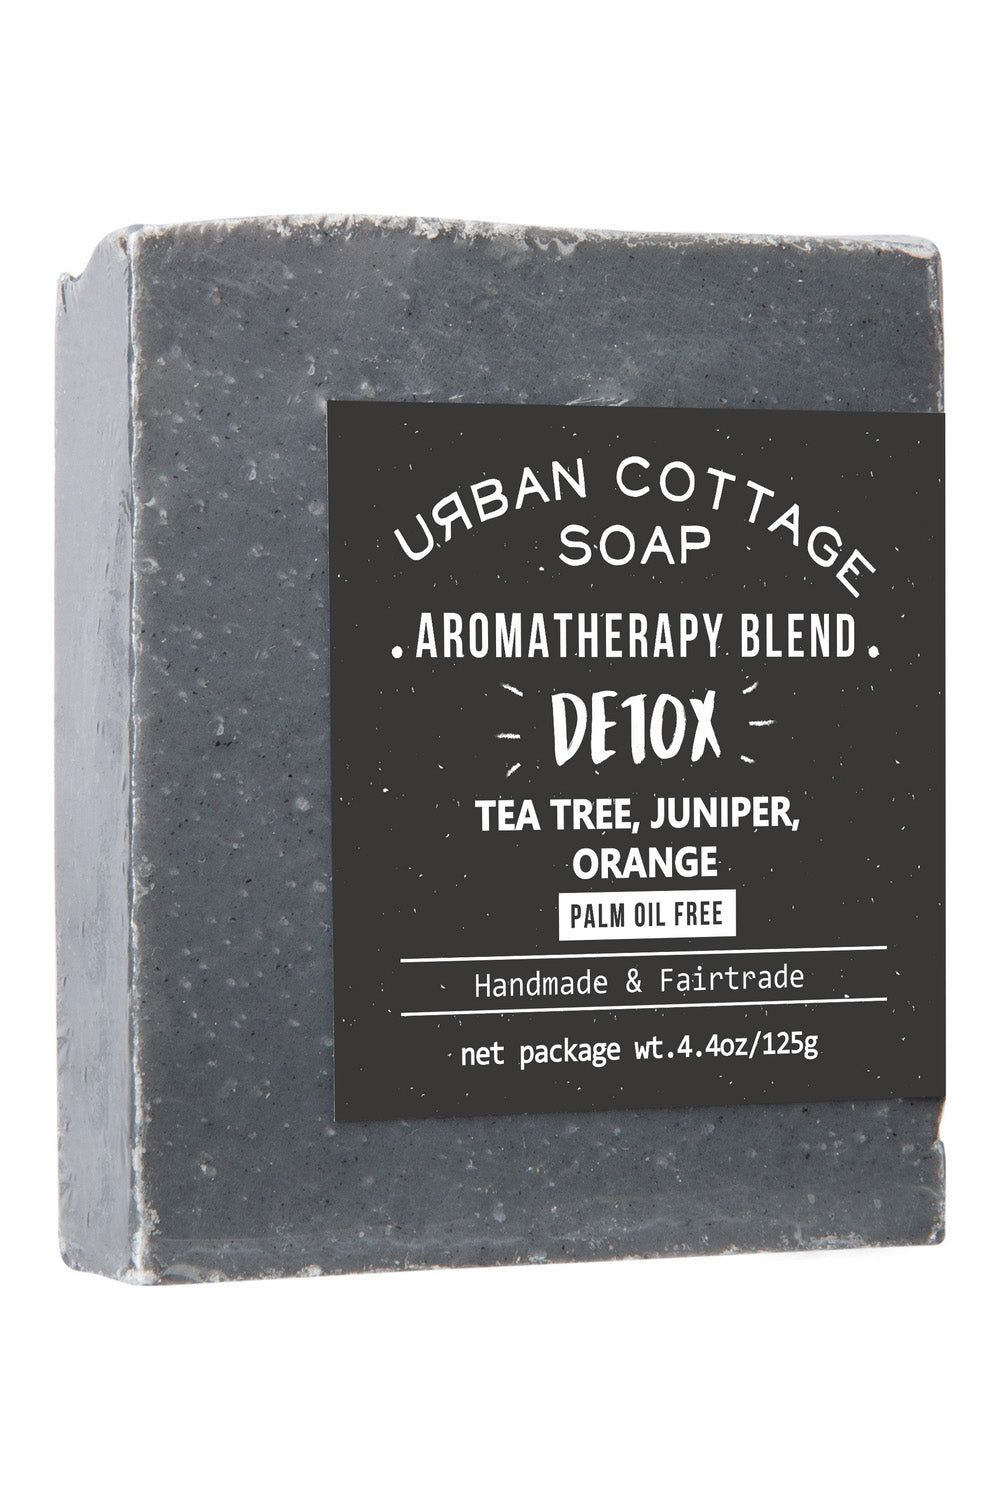 Tranquillo - Urban Cottage Soap DETOX